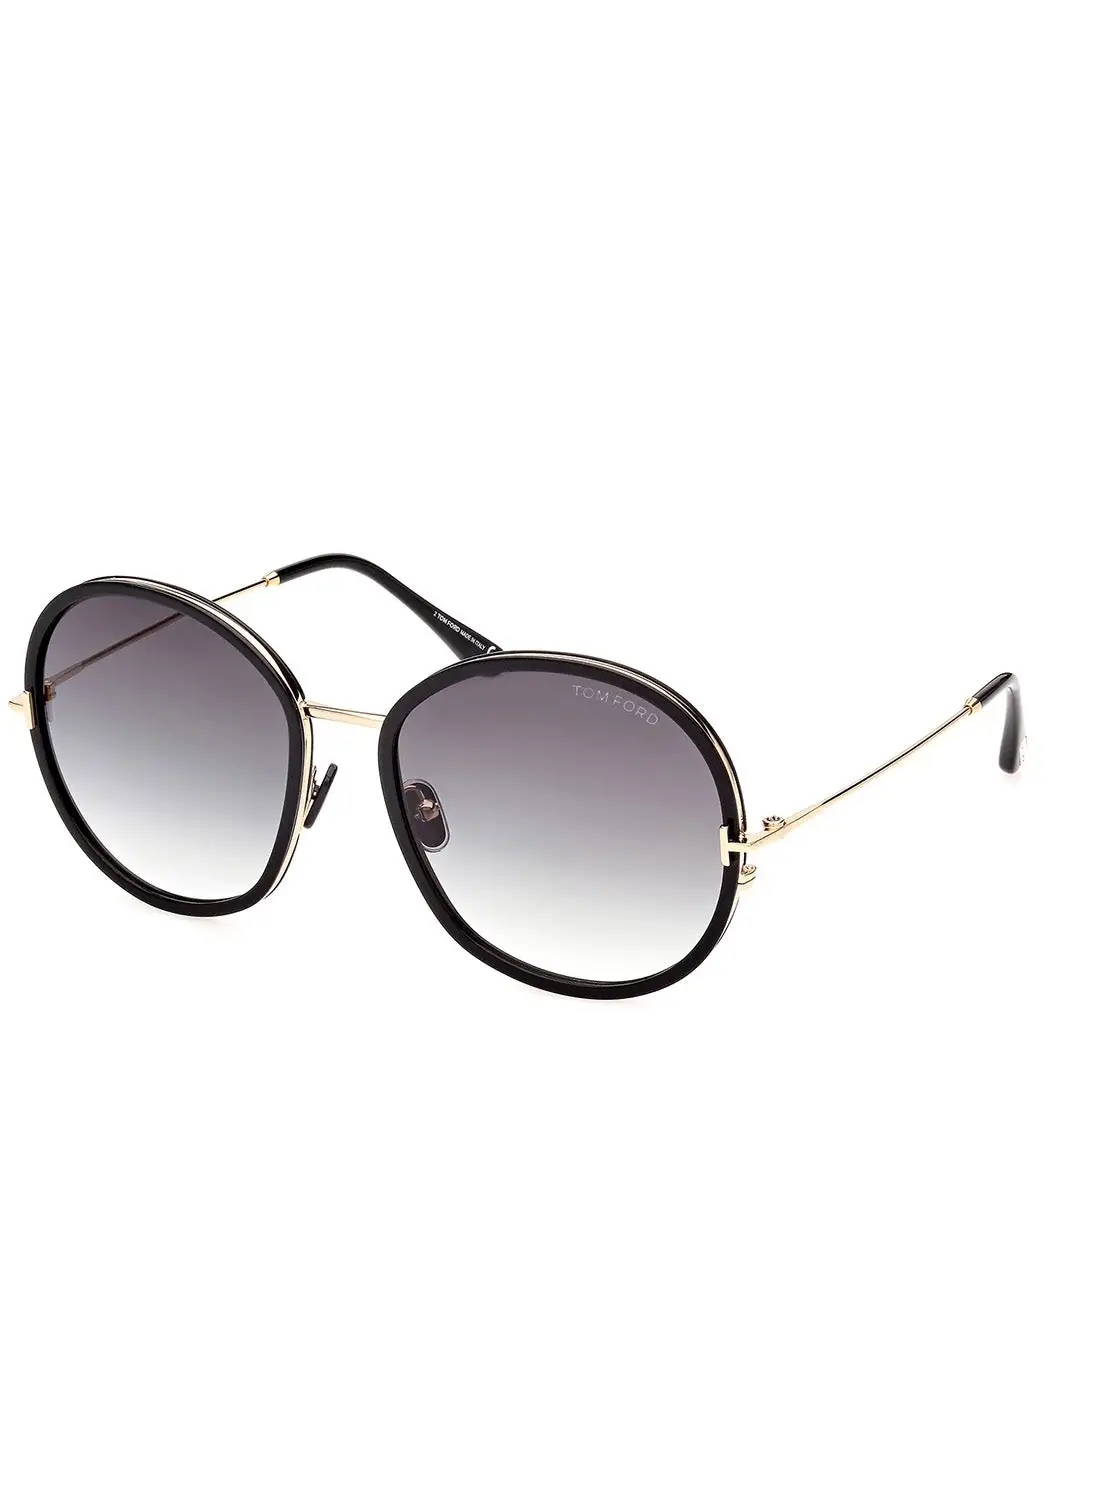 TOM FORD Women's UV Protection Round Sunglasses - FT094601B58 - Lens Size: 58 Mm